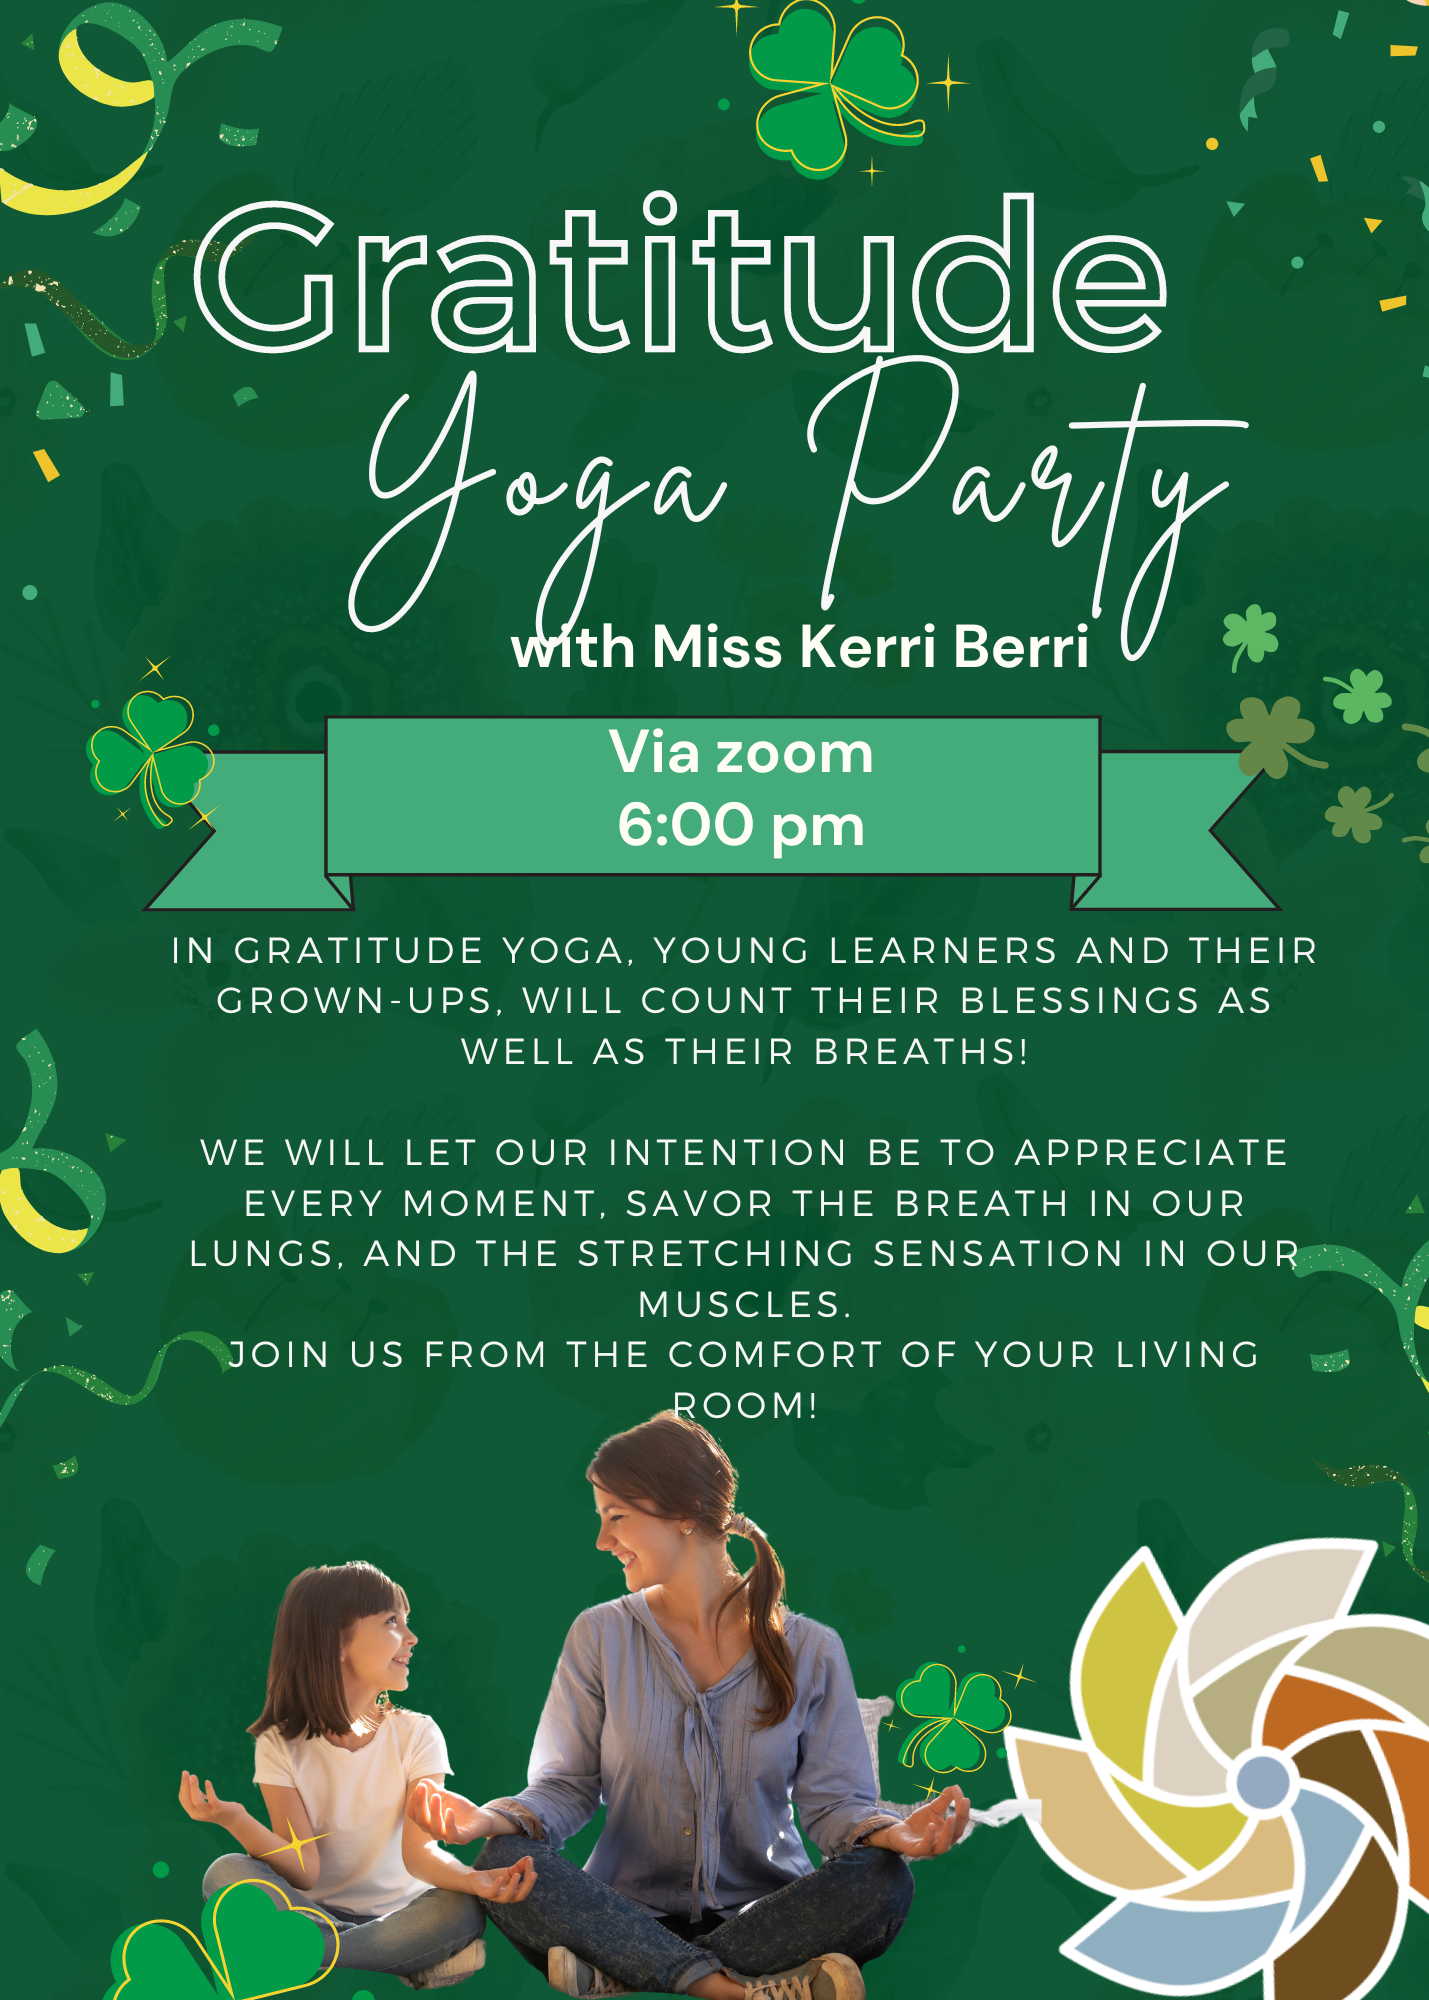 Gratitude Yoga Party with Miss Kerri Berri